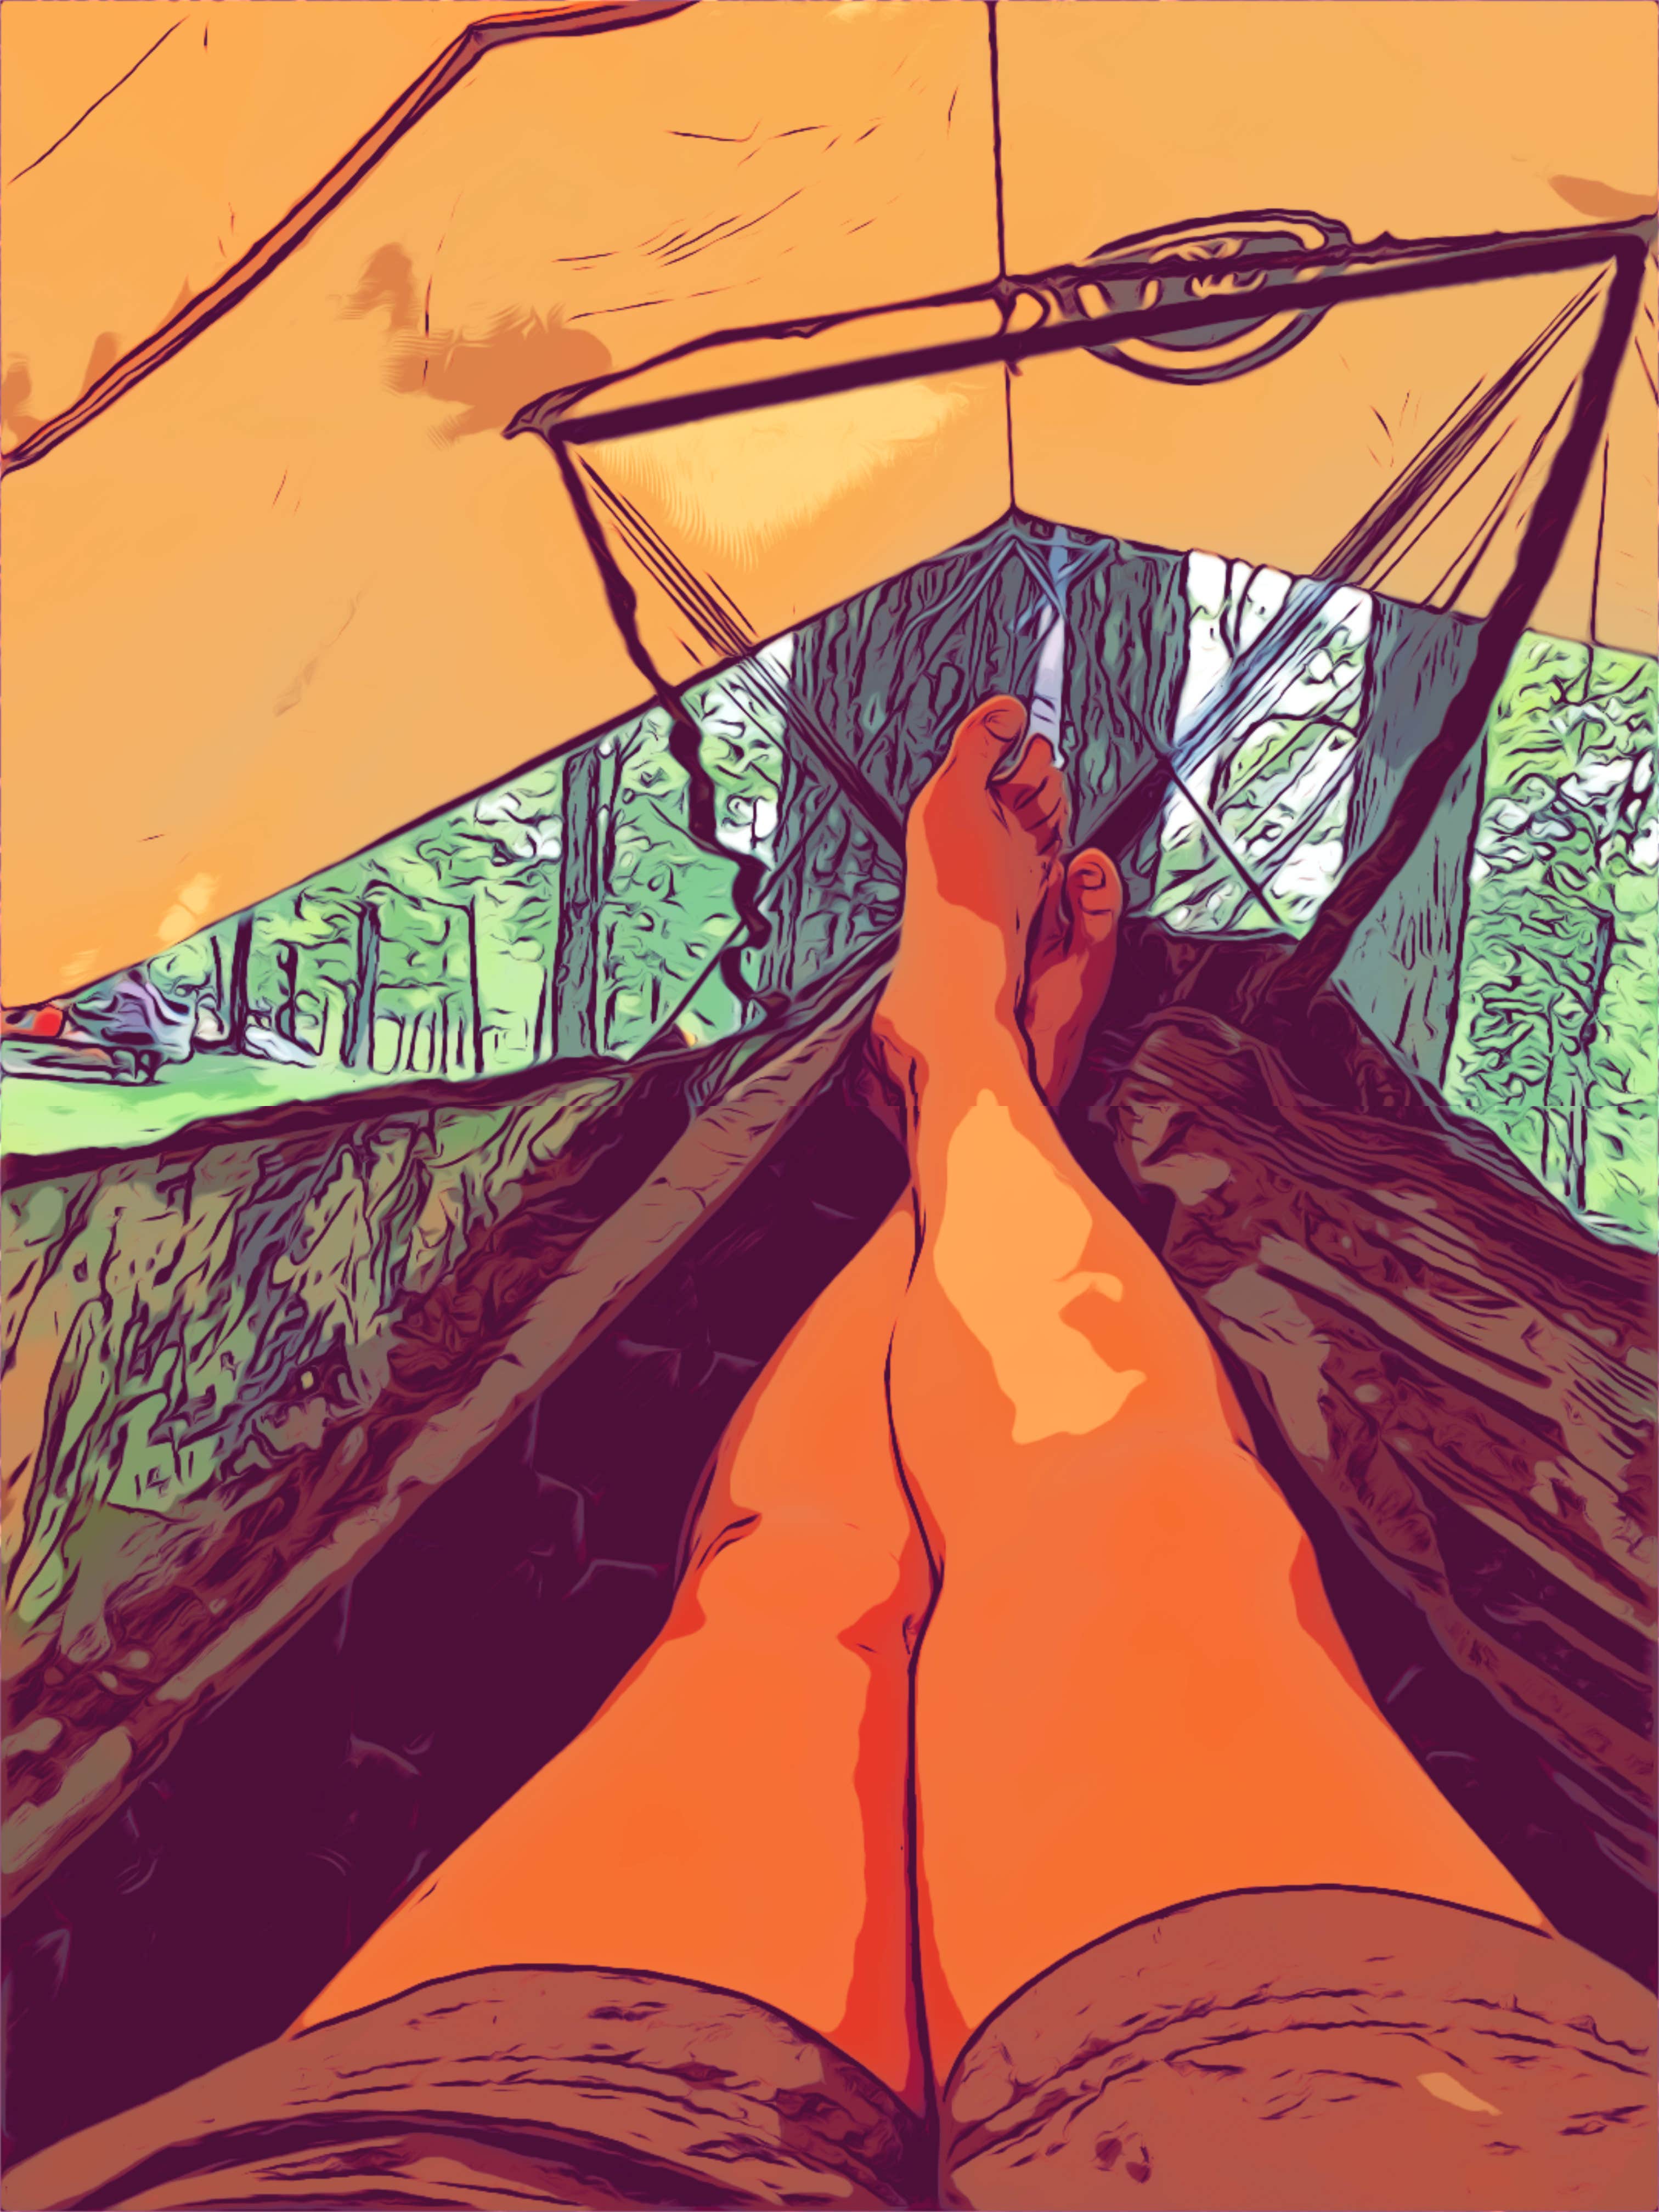 2019 Cartoonized shot in the hammock